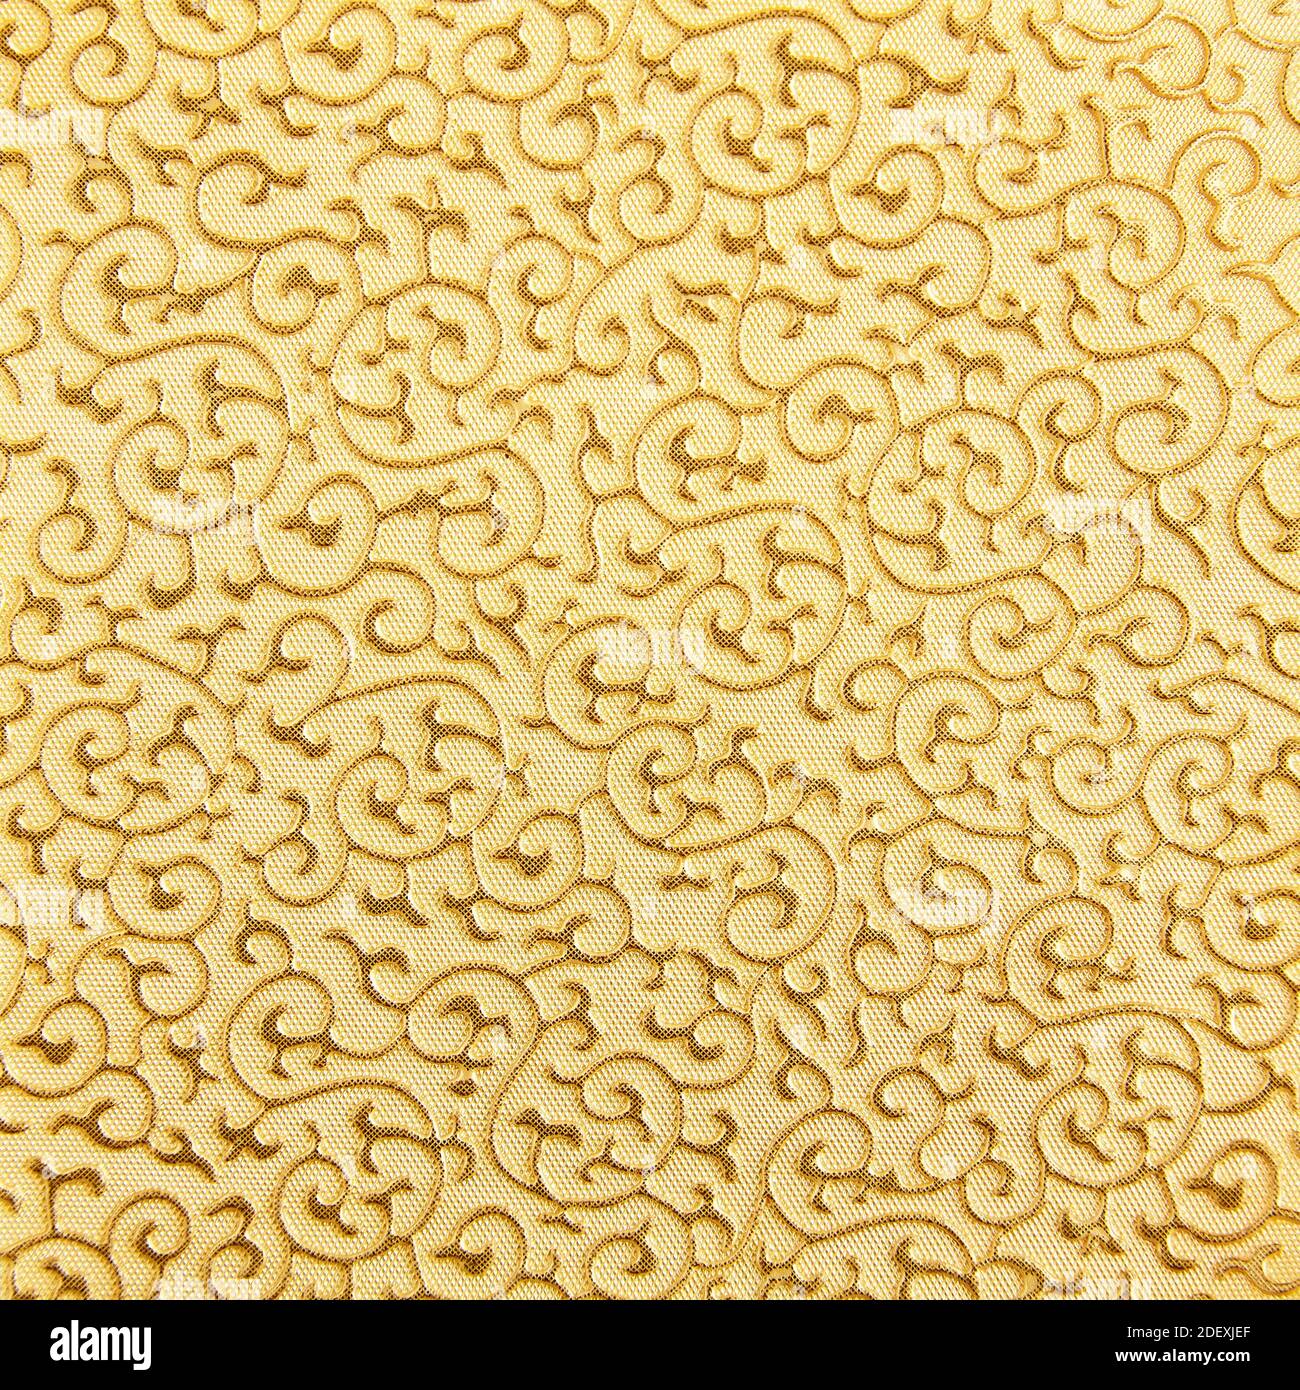 98 Background Gold Cloth Pics - MyWeb